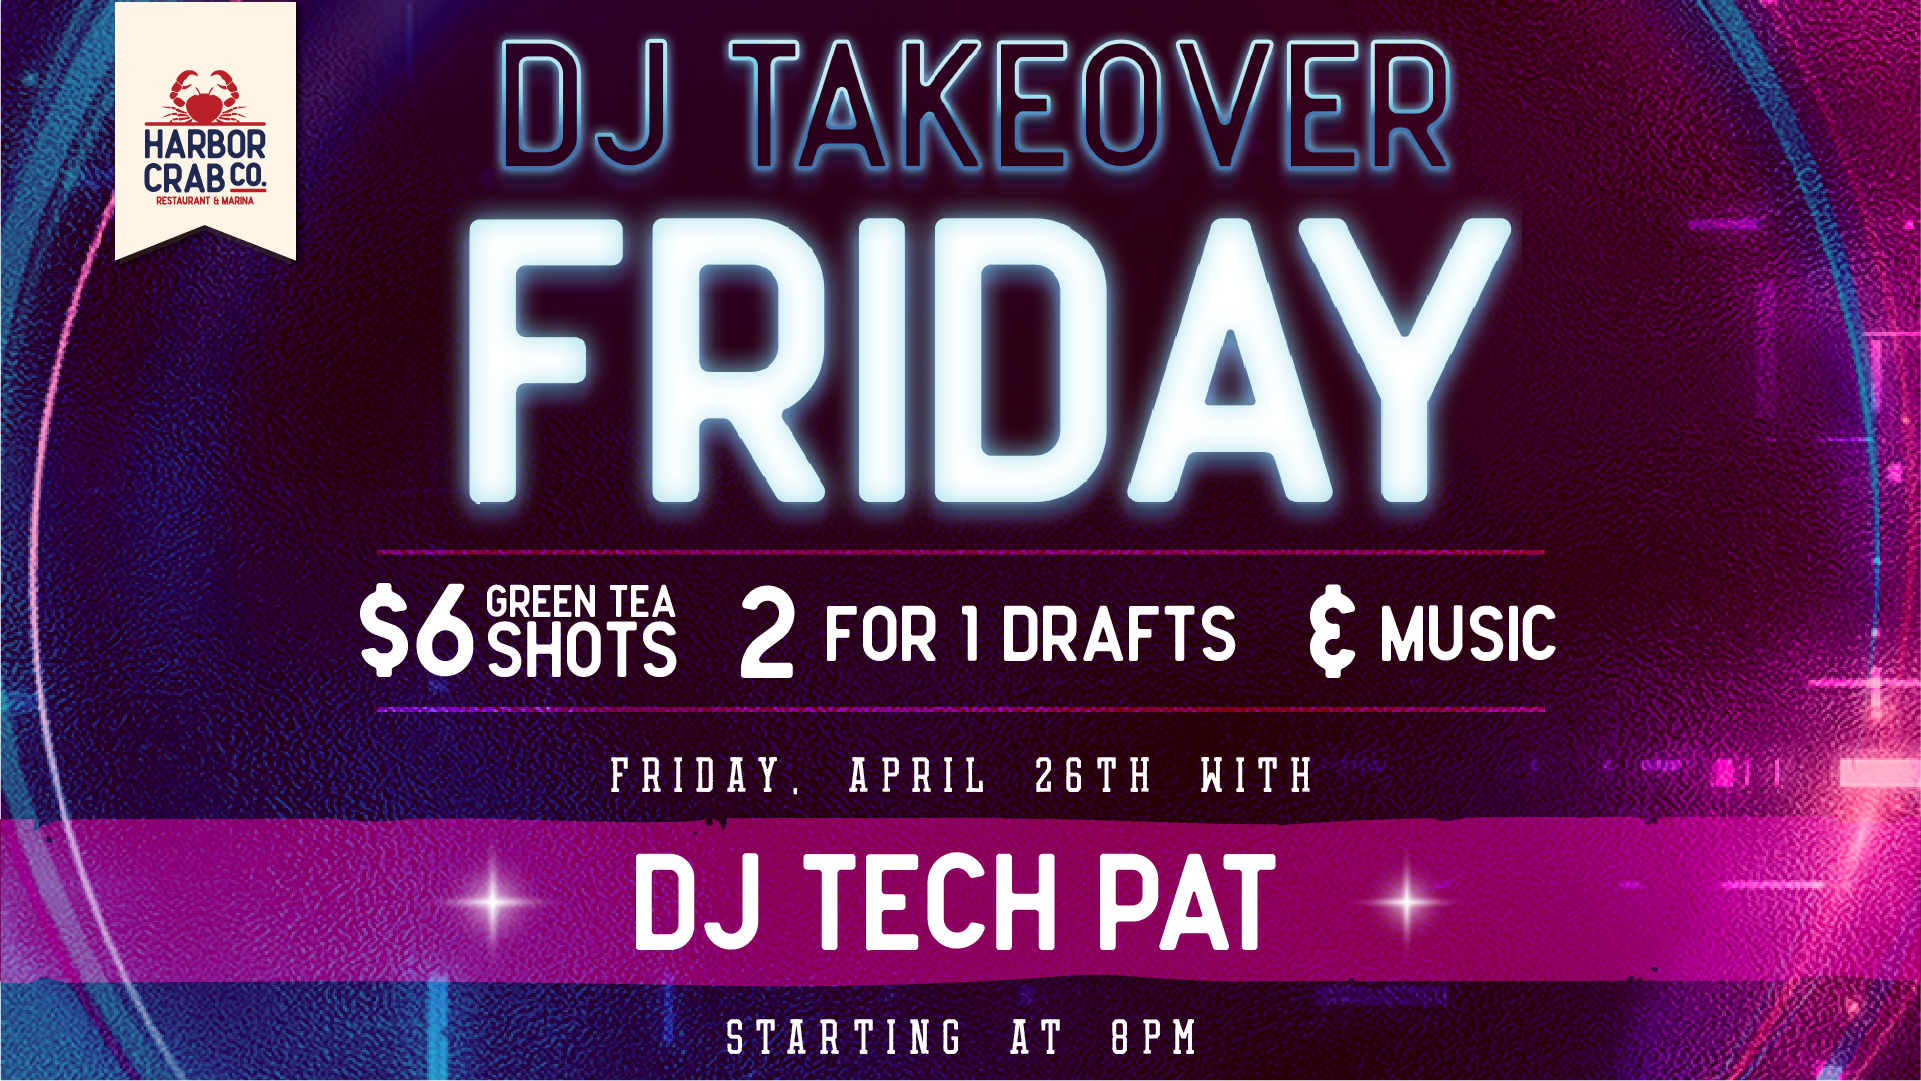 DJ Tech Pat at the decks on Friday, April 26 at 8PM.